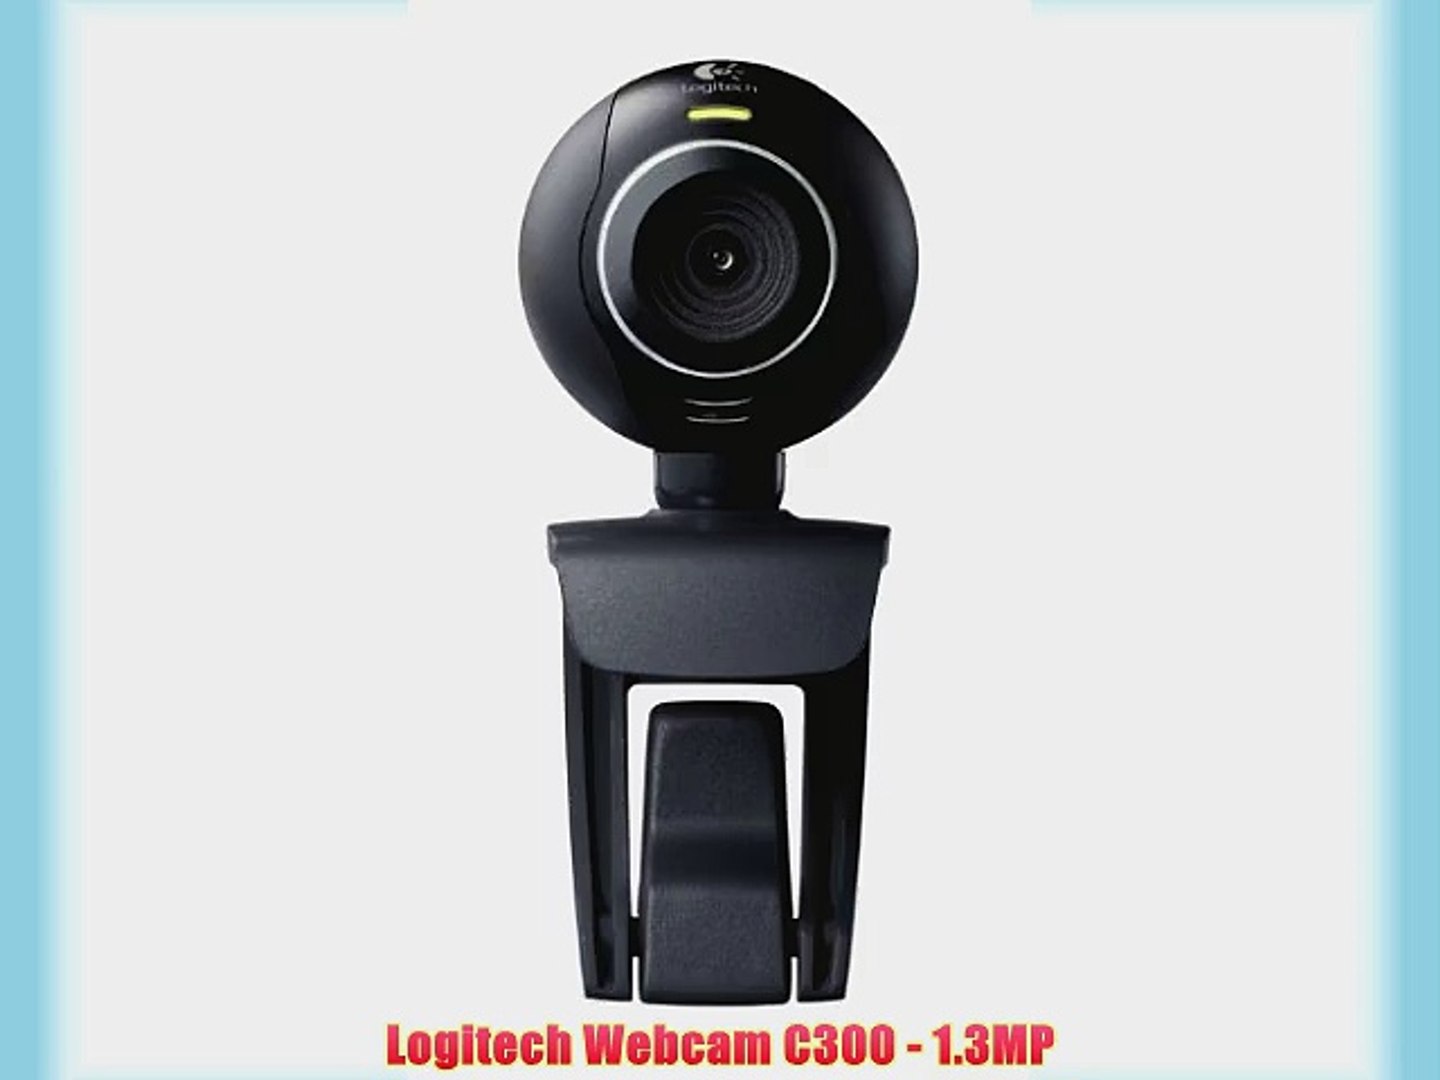 Logitech Webcam C300 - 1.3MP - video Dailymotion